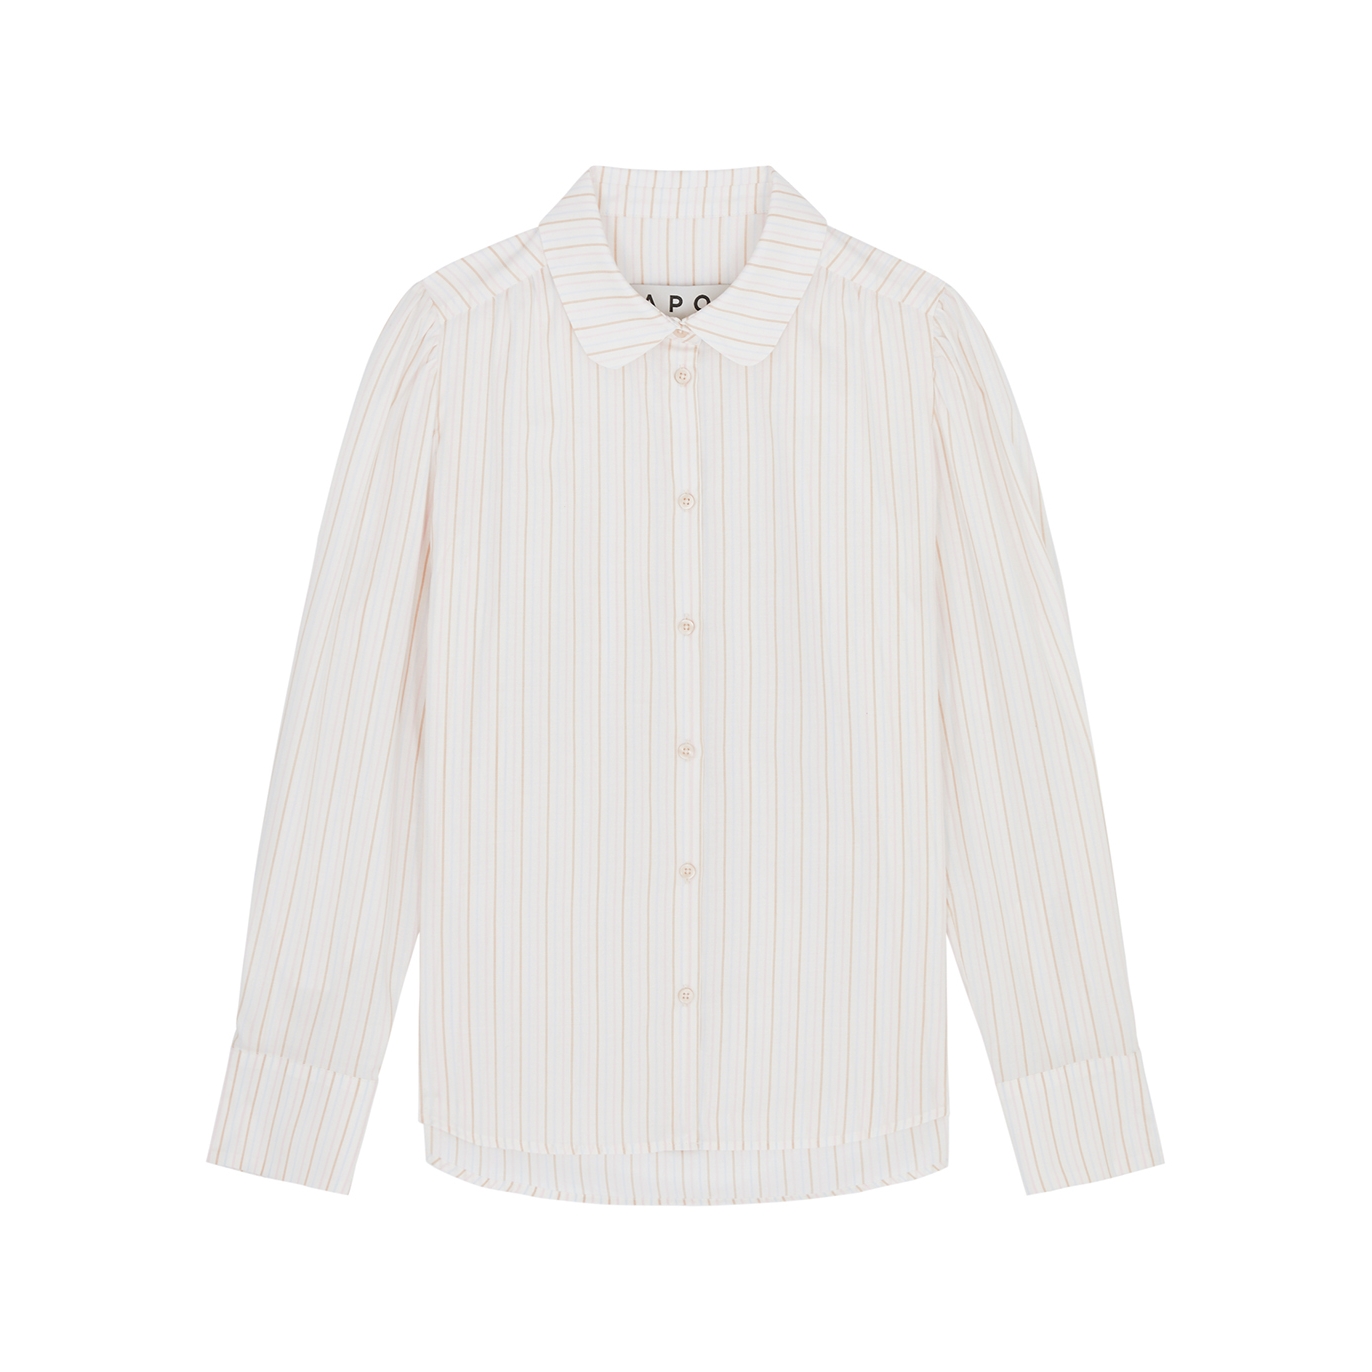 Apof Avalon Striped Cotton And Silk-blend Shirt